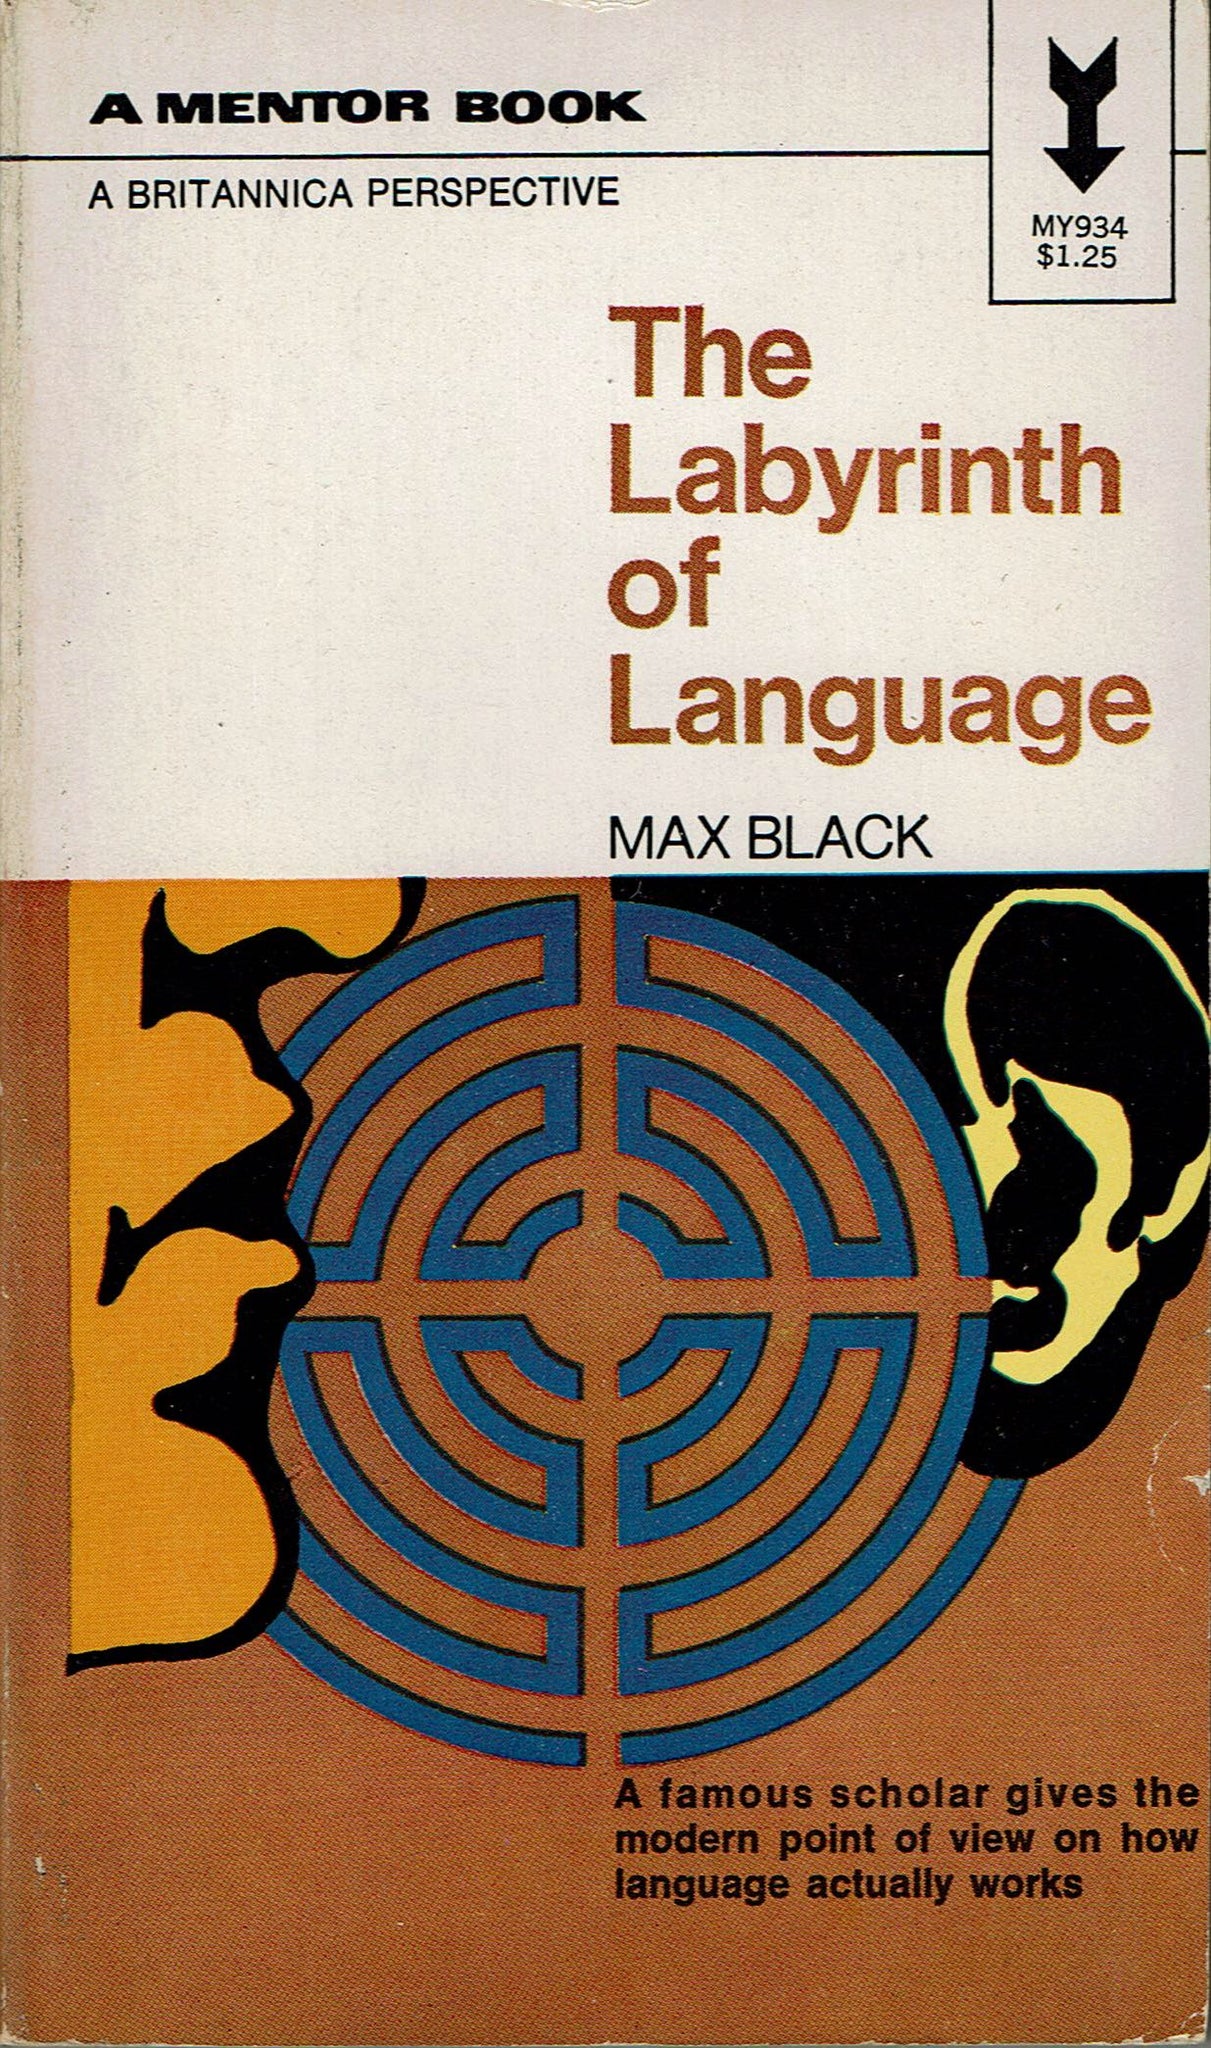 The Labyrinth of Language